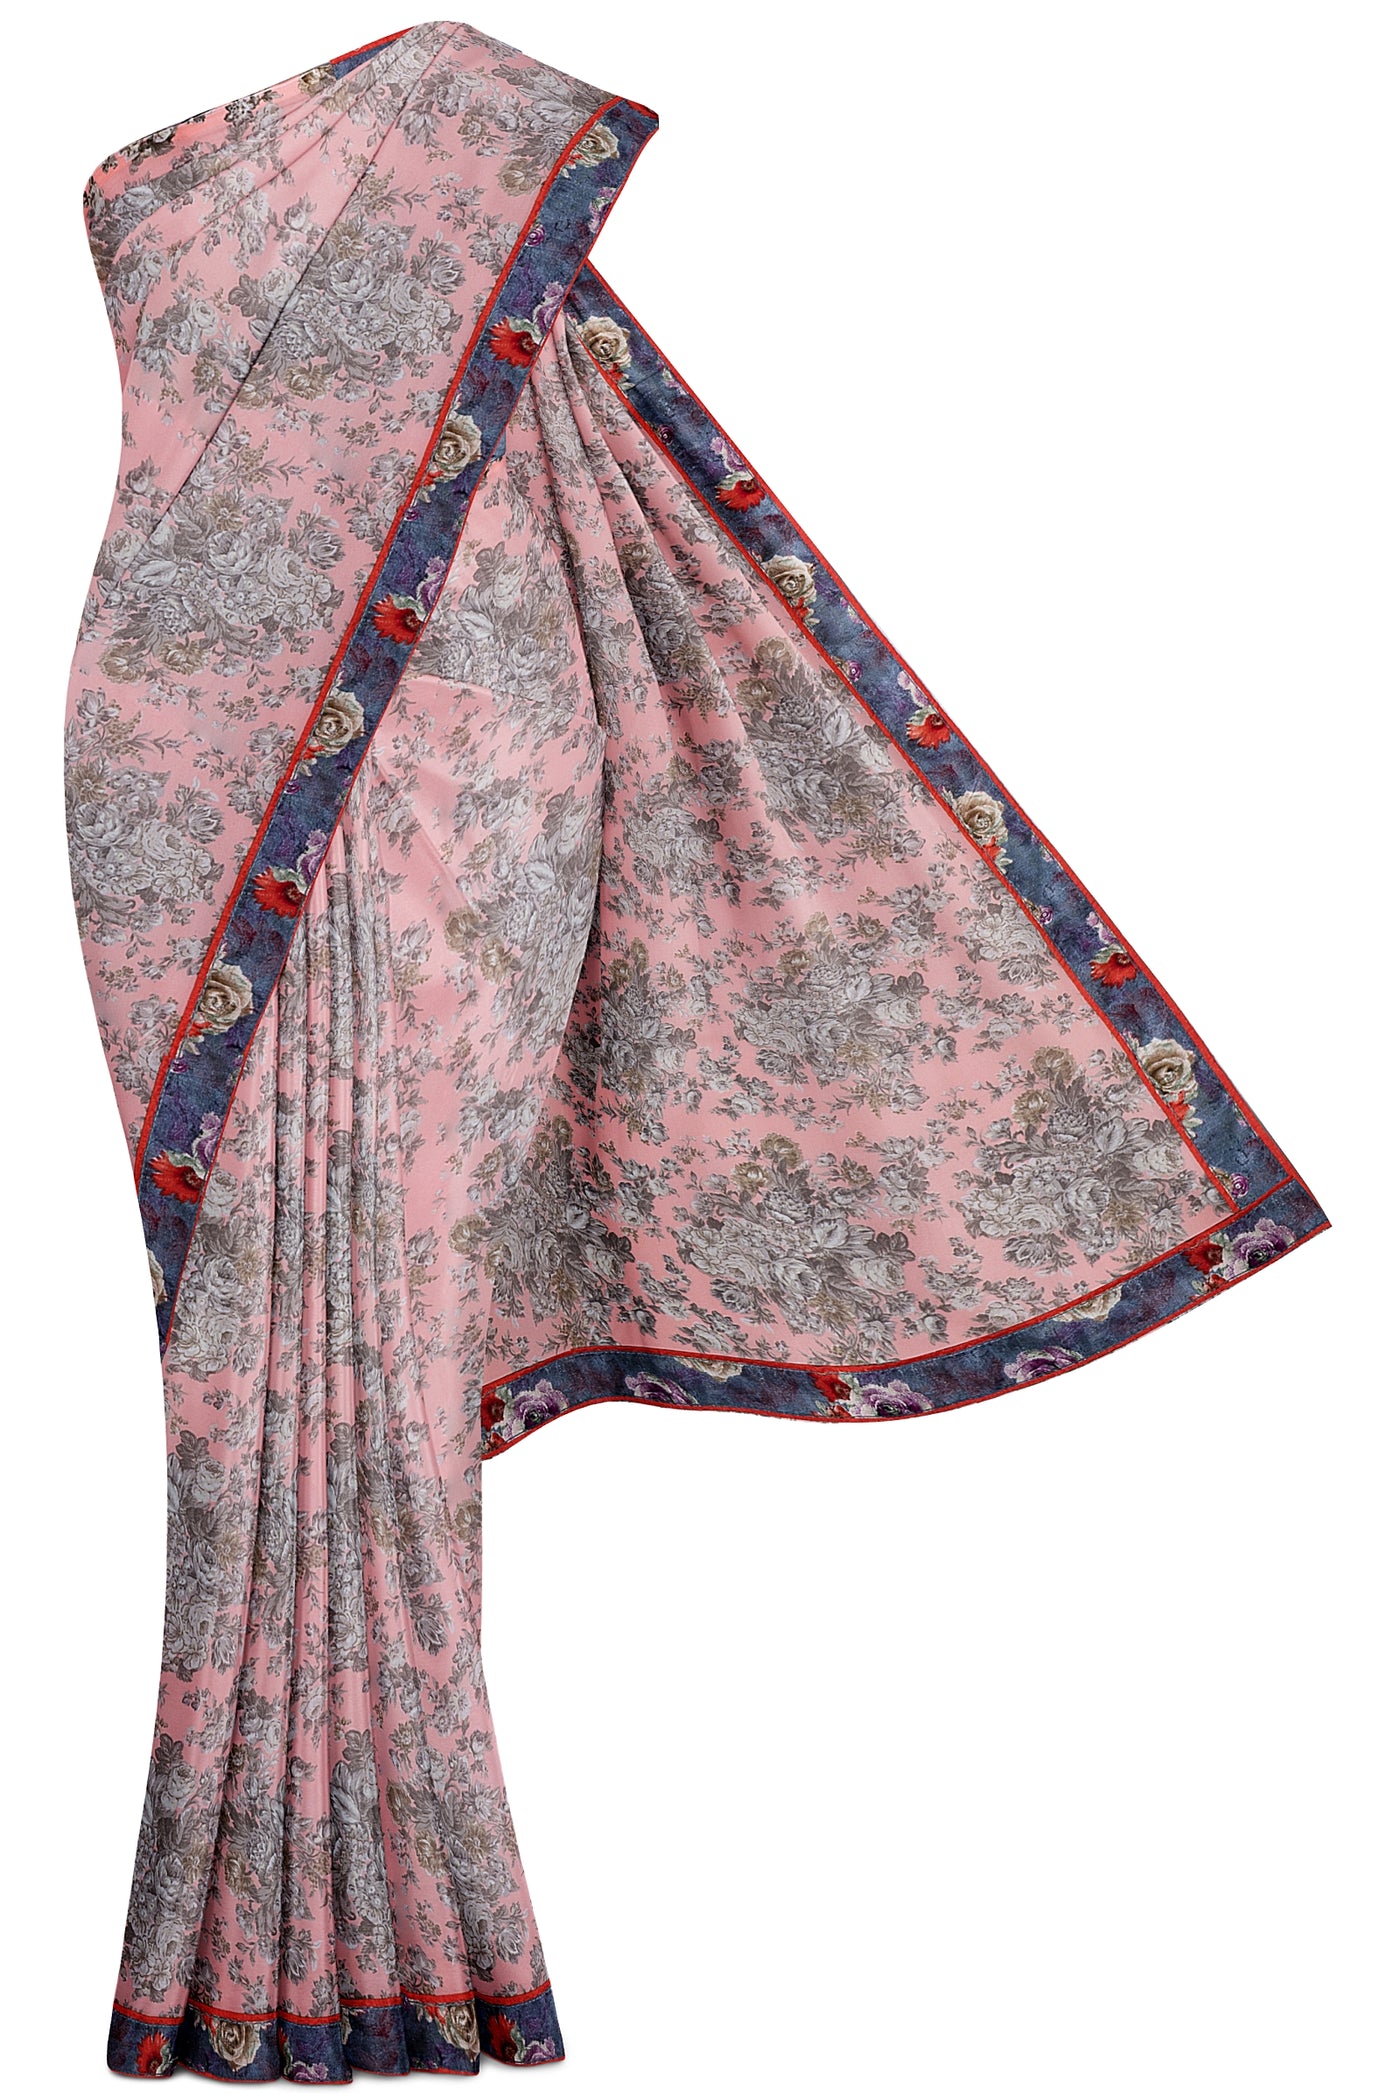 Peach and Grey Floral Printed Chiffon Sari - Clio Silks